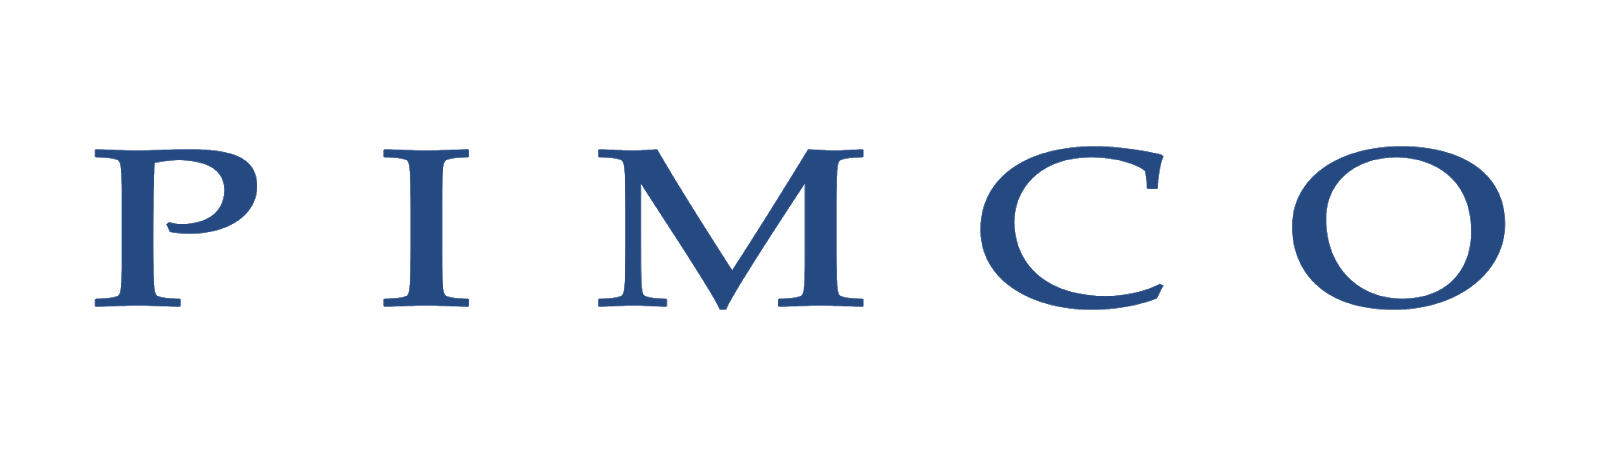 PIMCO-logo.png